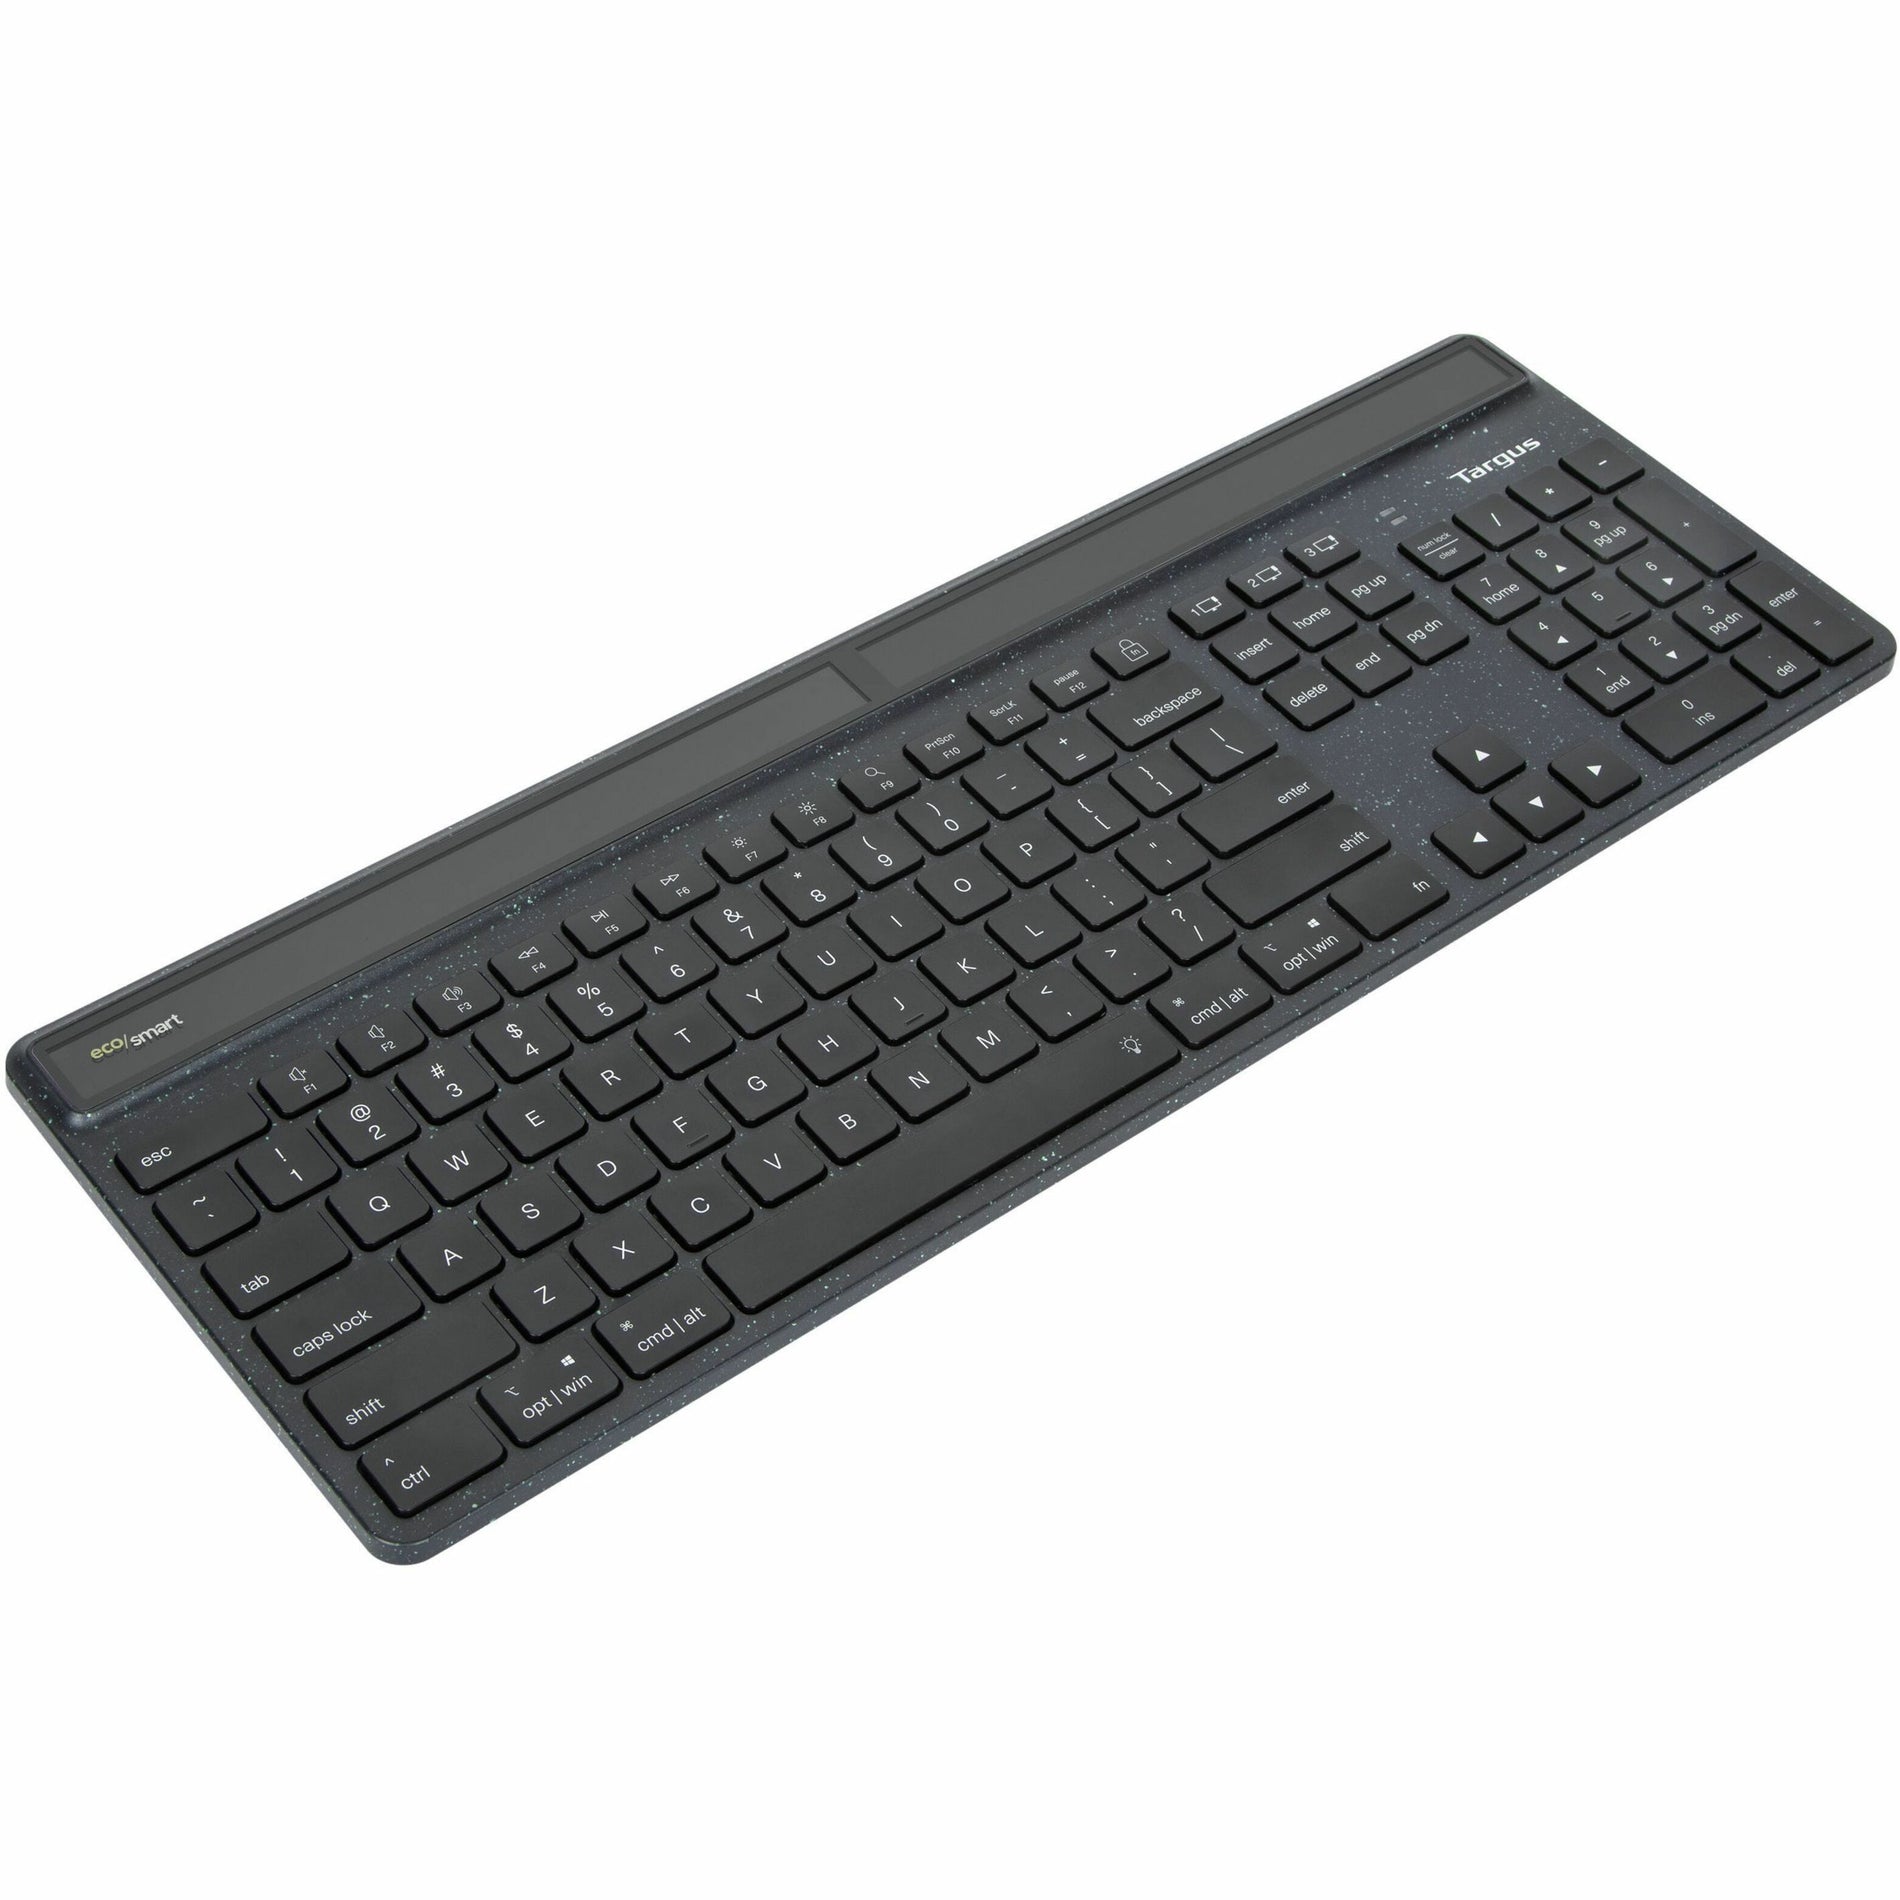 Targus AKB868US Sustainable Energy Harvesting EcoSmart Keyboard, Wireless Bluetooth, Backlit, Rechargeable Battery